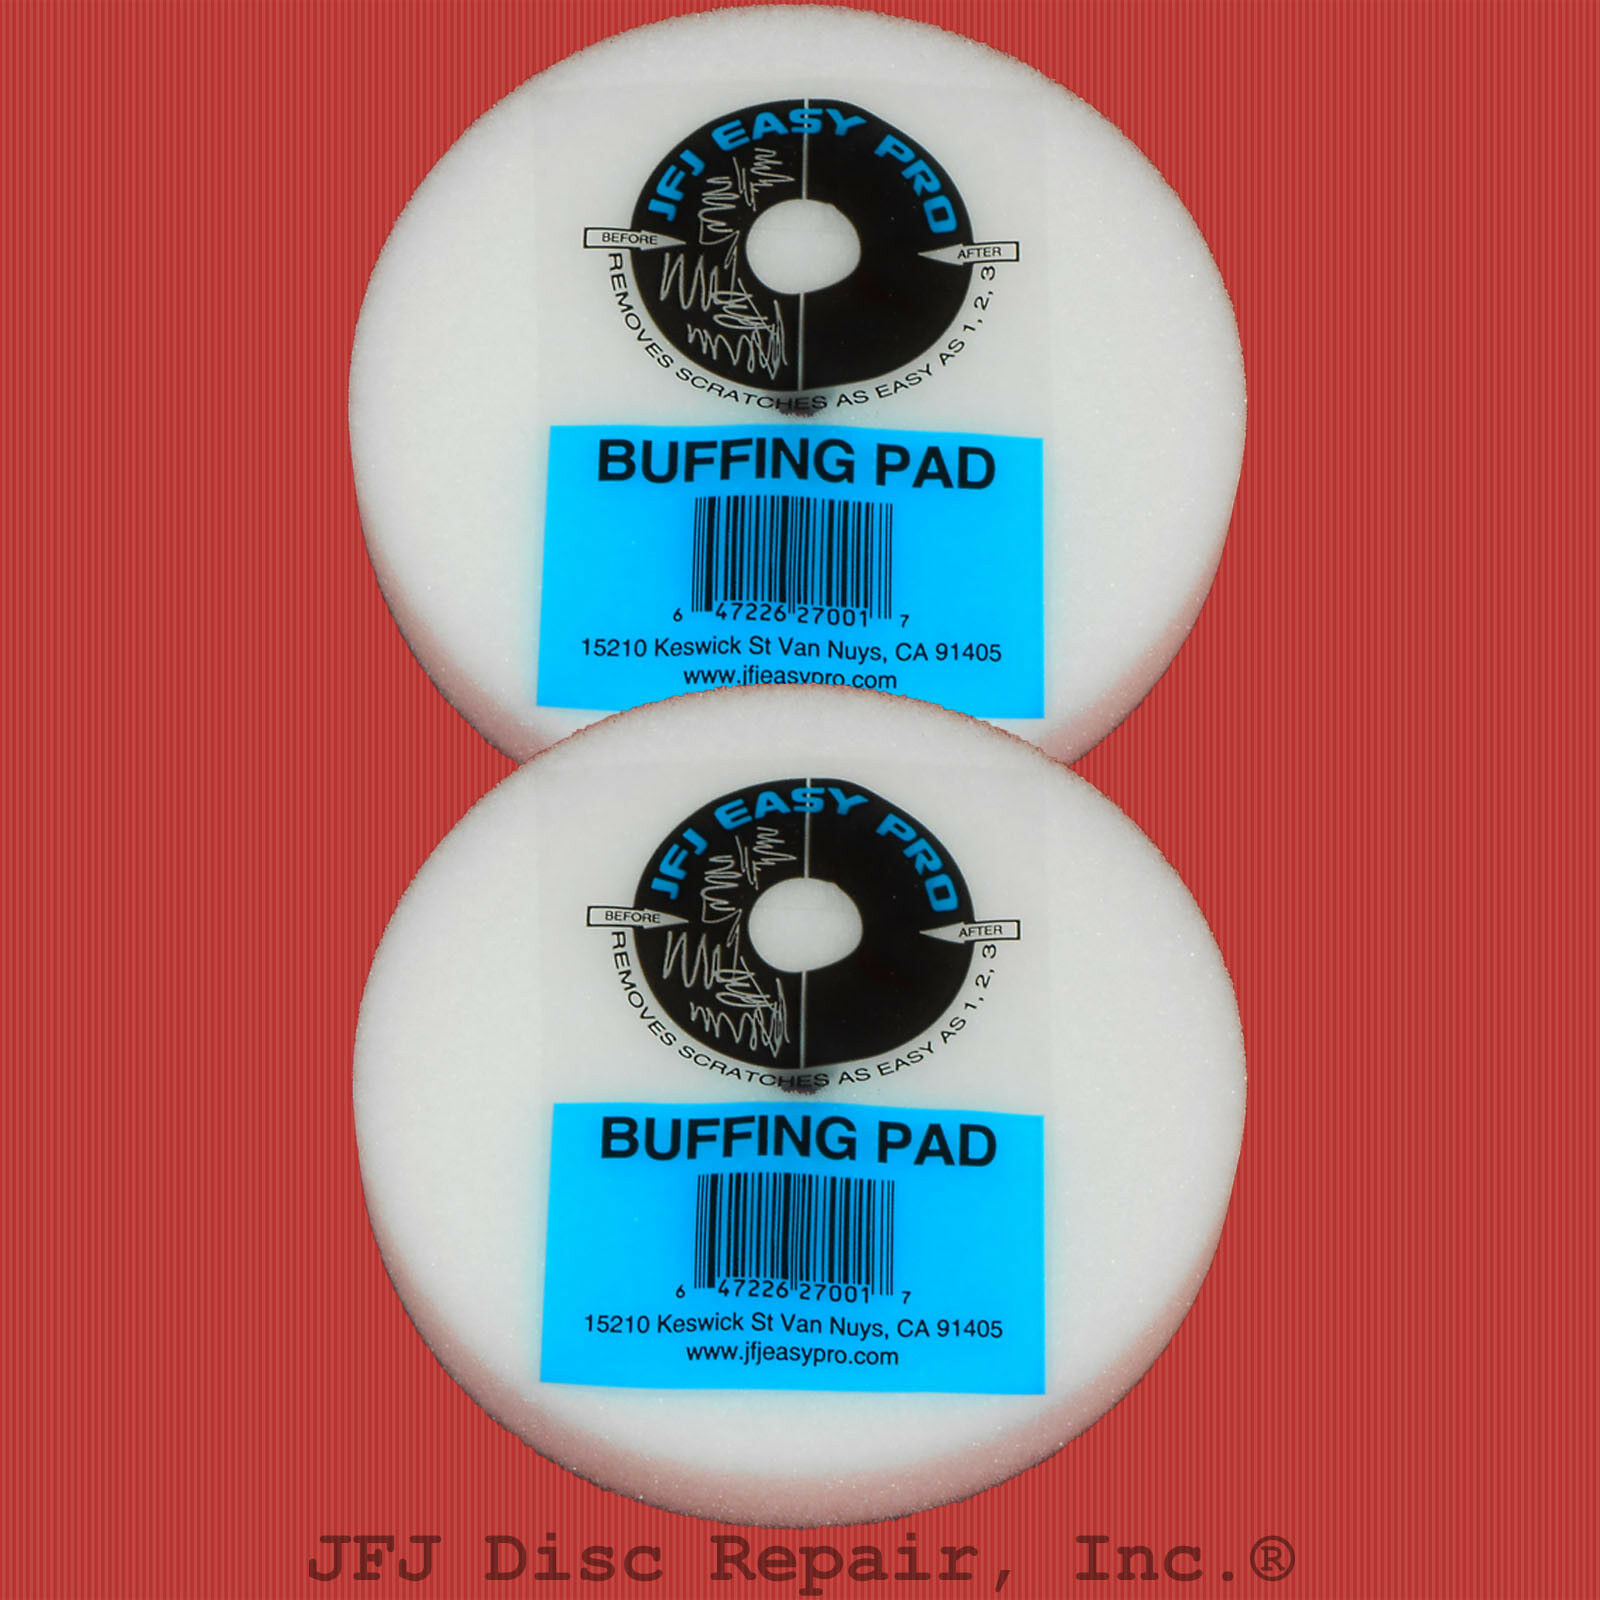 2 Jfj Pro Easy Buffing Pads - Save Money & Use Original Supplies